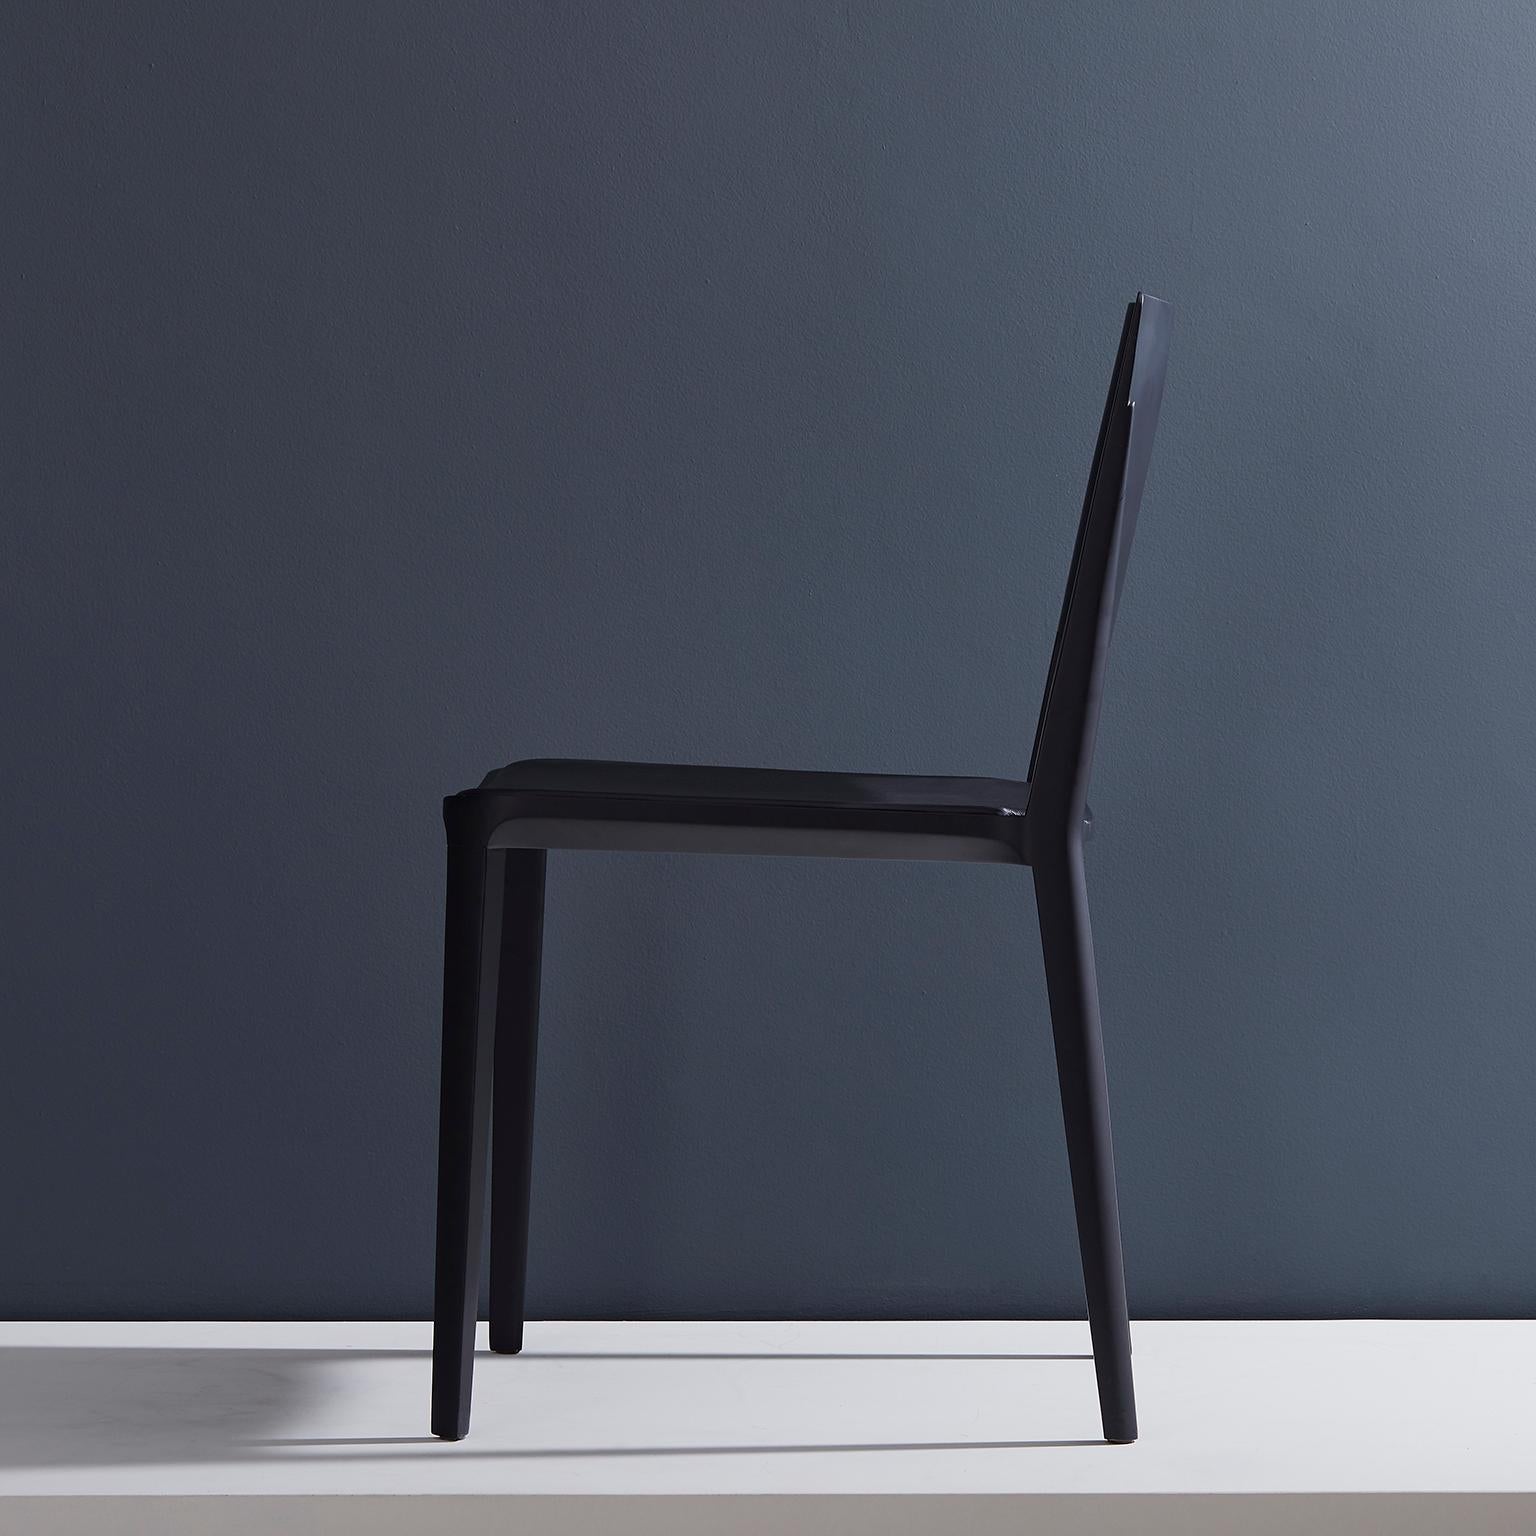 Moderne Chaise moderne minimaliste en bois massif finition noire massive, assise en cuir en vente